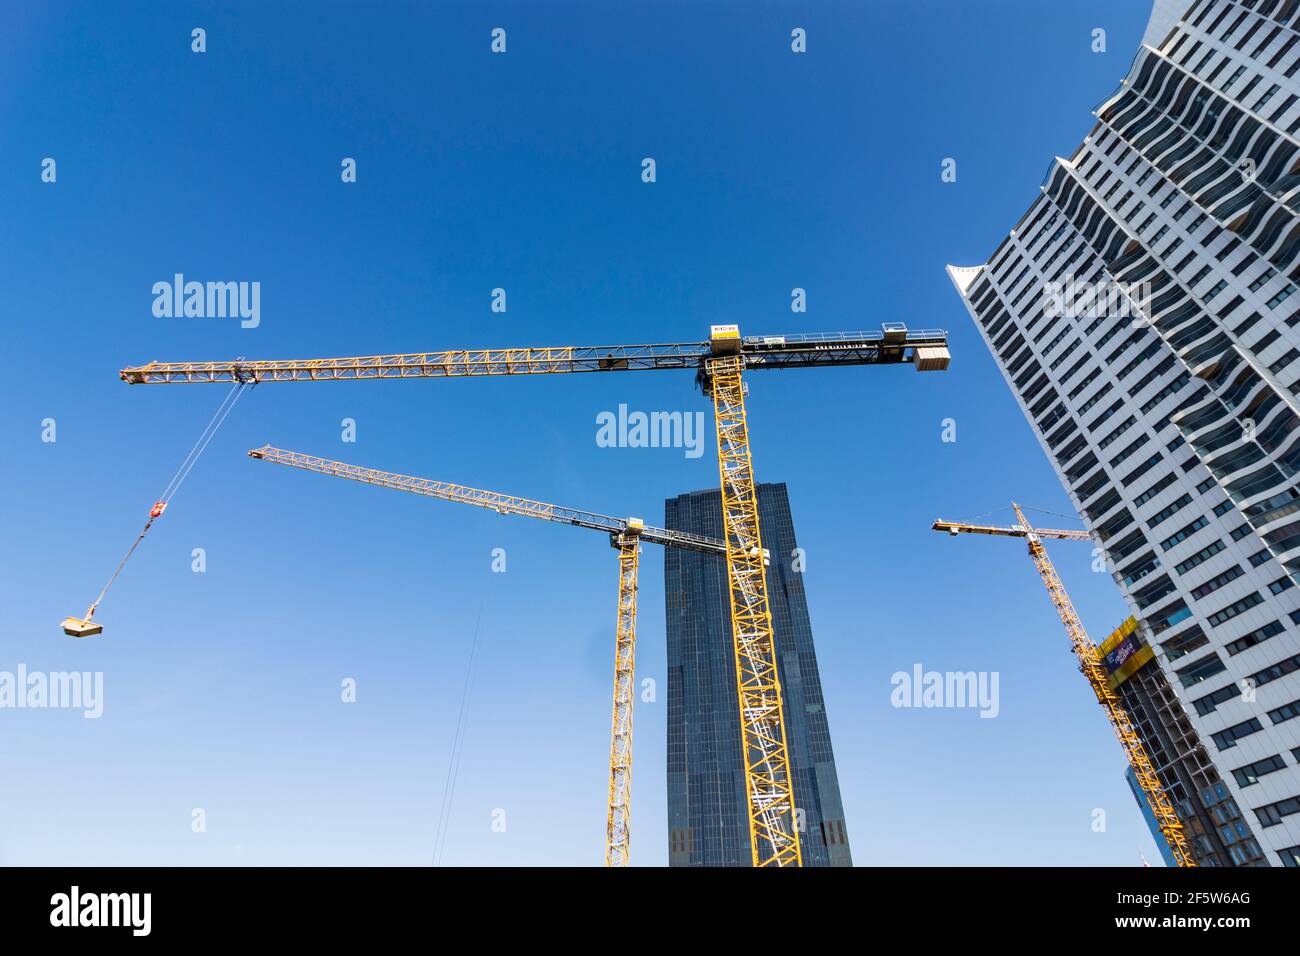 Wien, Vienna: cranes at construction site, blue sky, DC Tower 1, highrise 'Hochhaus Neue Donau', project 'Danube Flats' in 22. Donaustadt, Wien, Austr Stock Photo